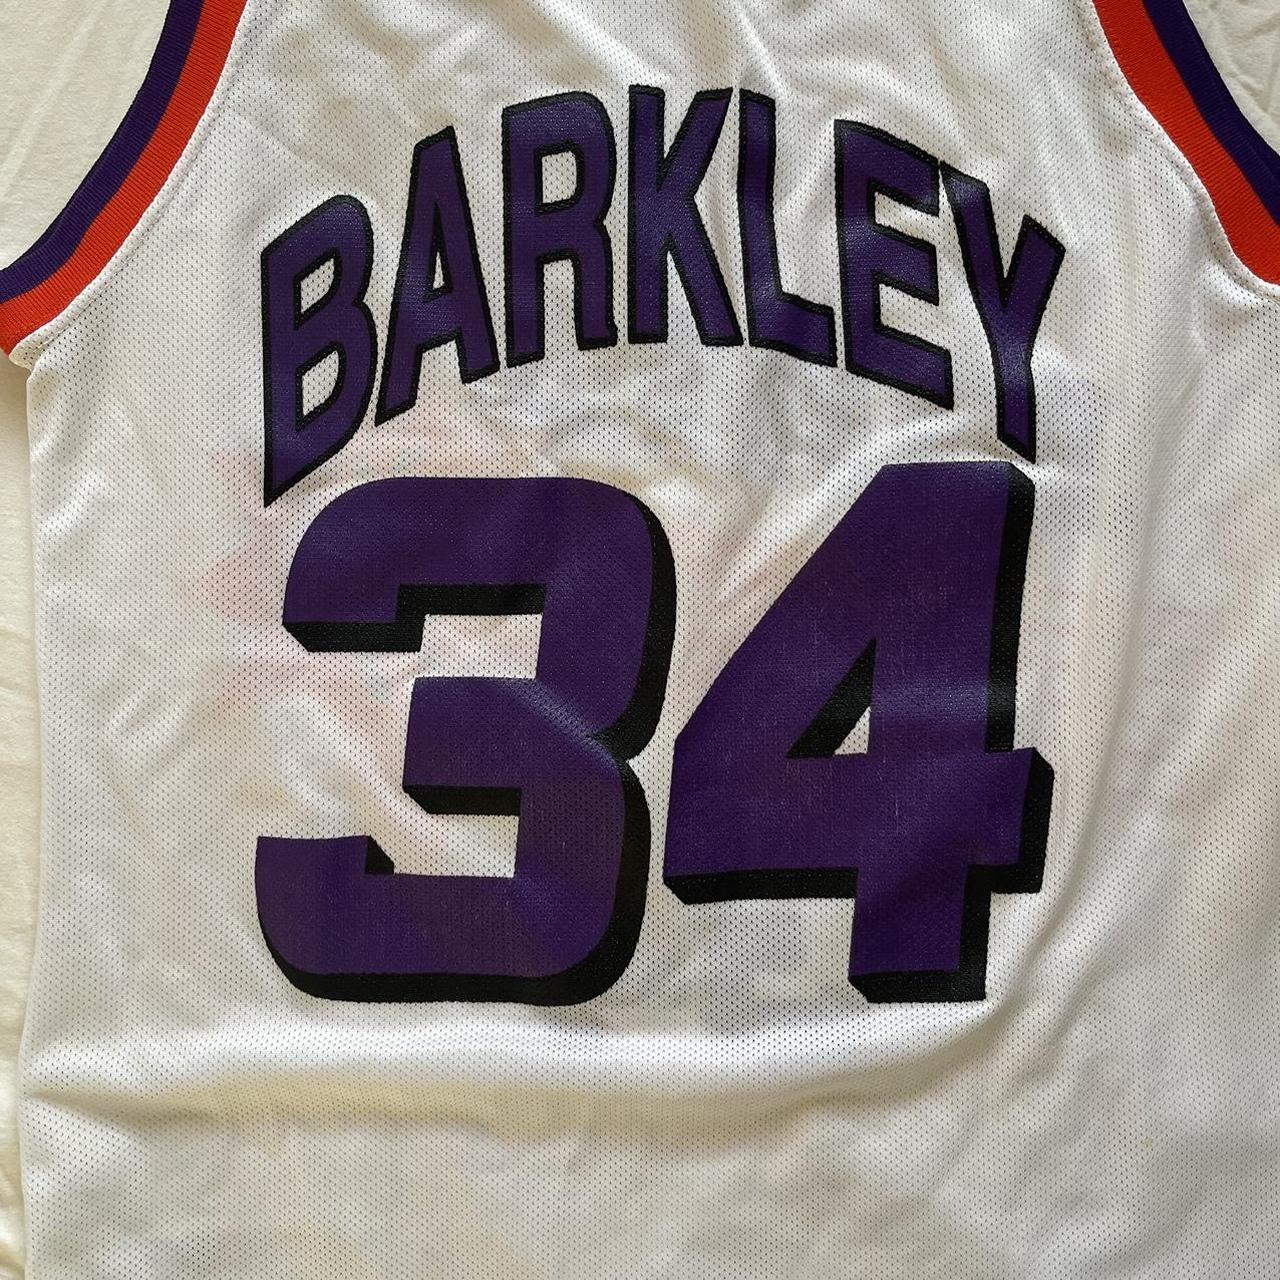 Vintage Champion Phoenix Suns Charles Barkley jersey - Depop